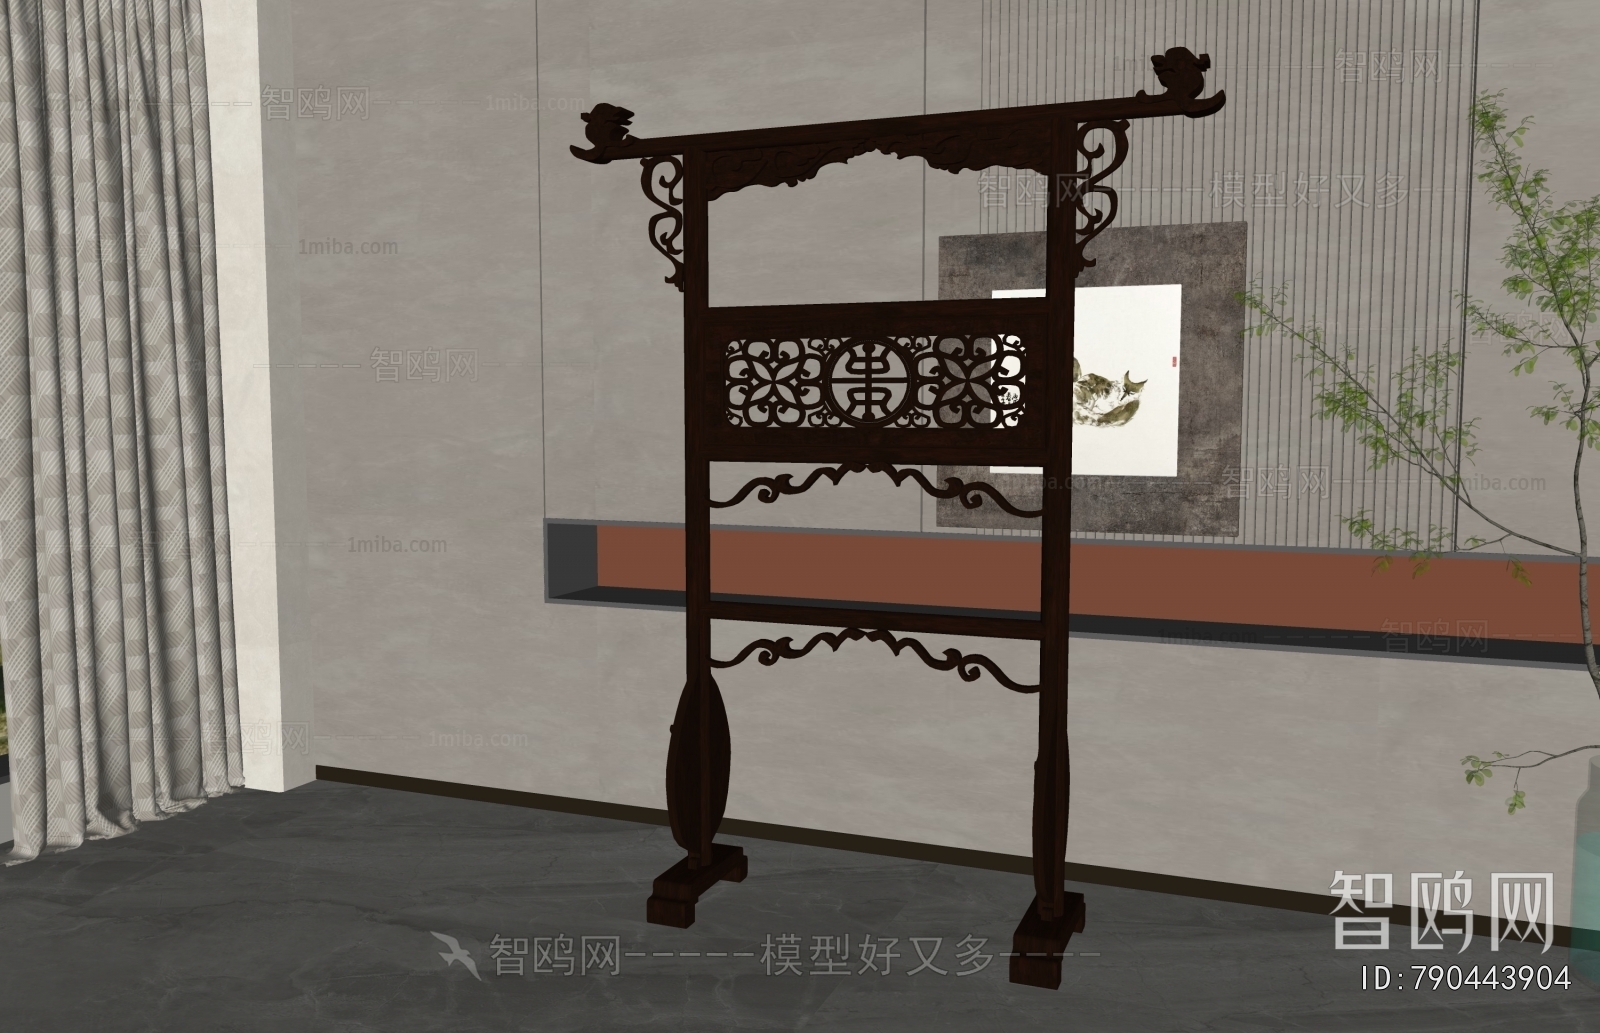 Chinese Style Coat Hanger